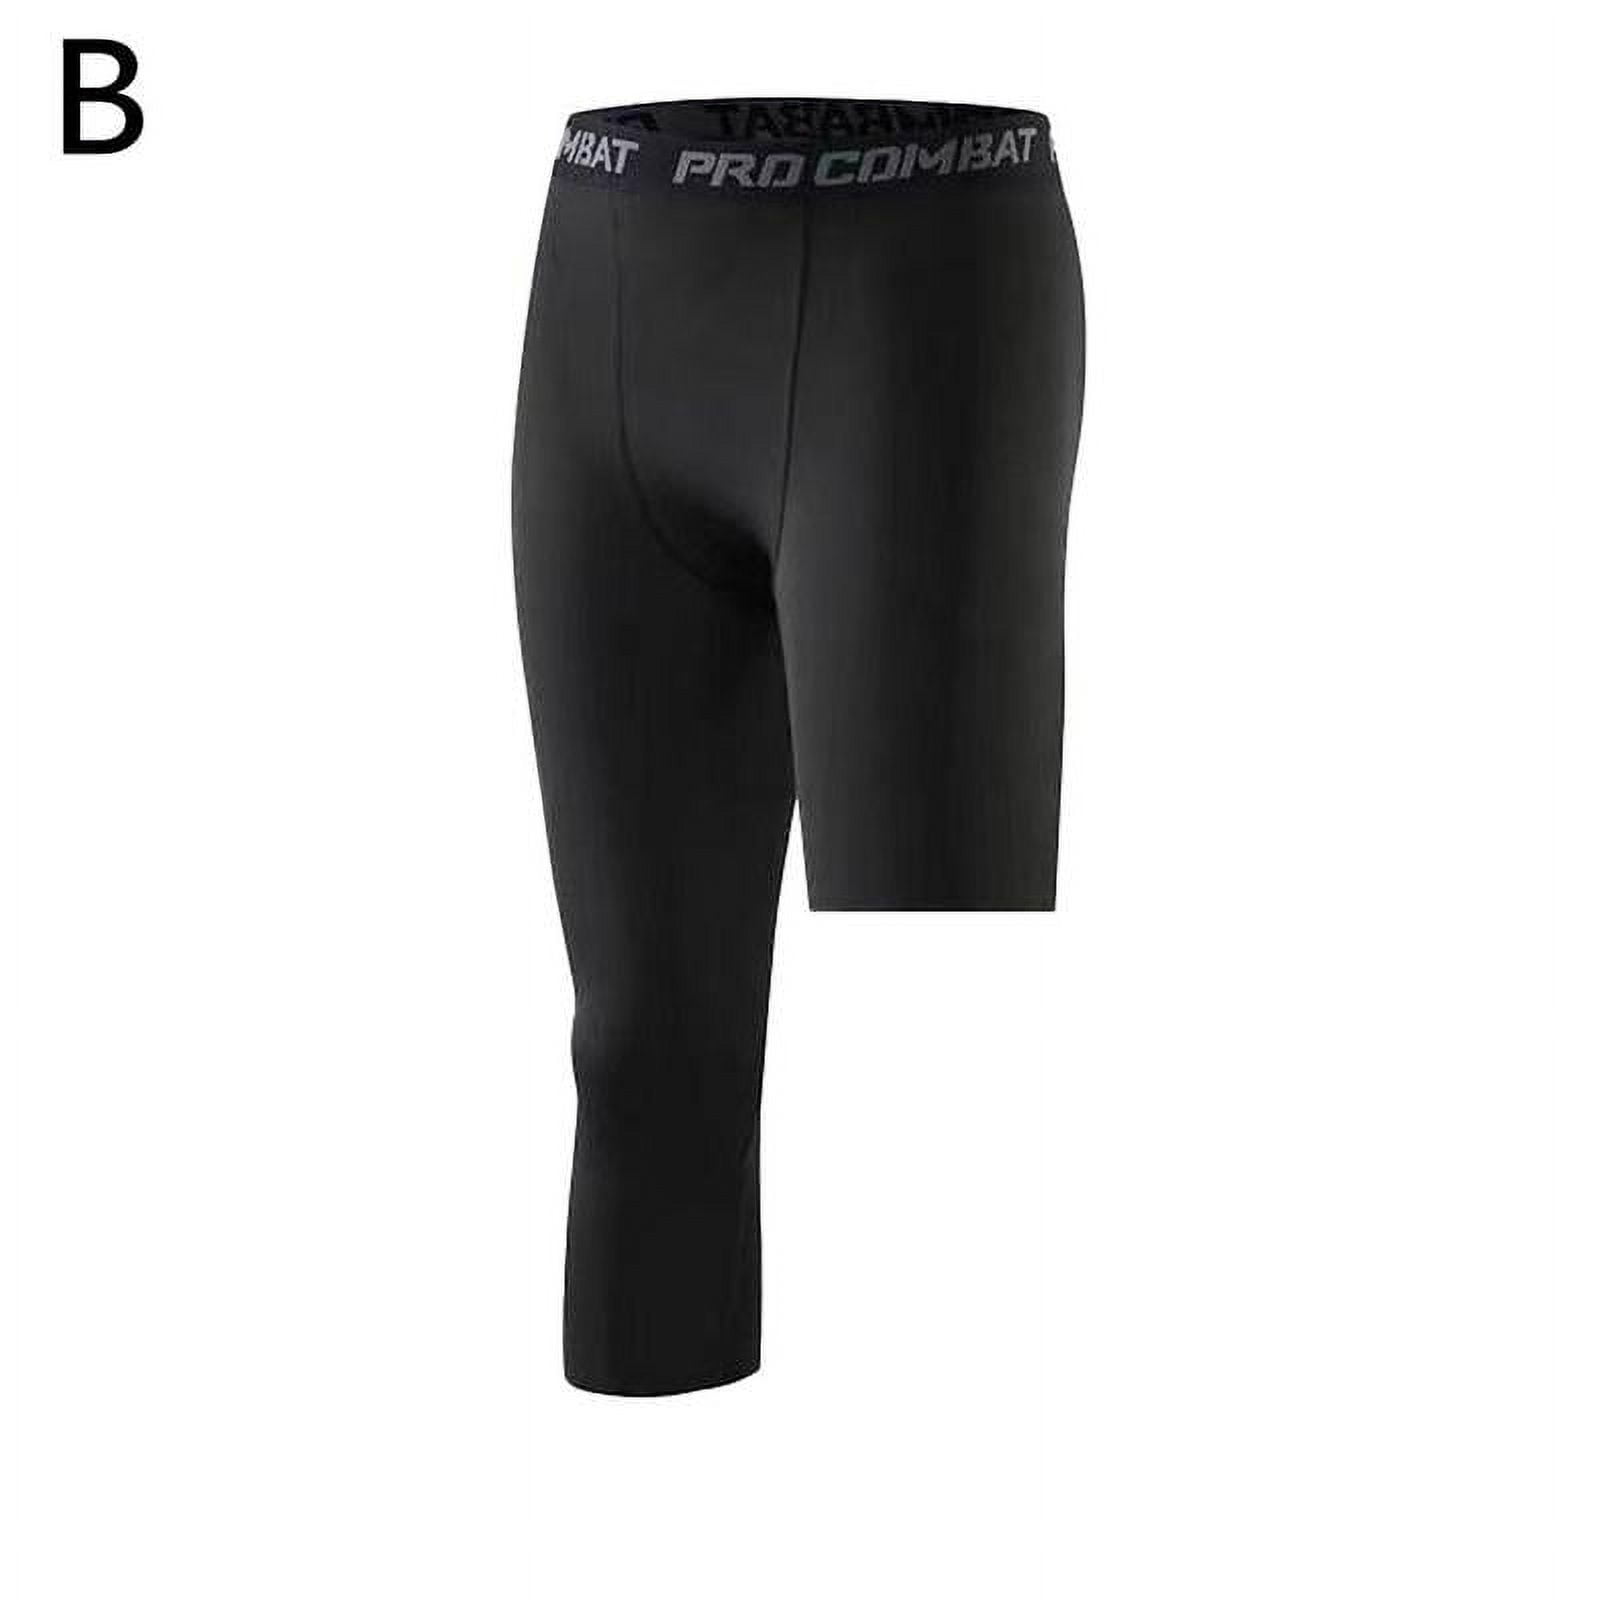 ABTIOYLLZ 3 Pack Men's 3/4 Compression Pants Athletic Leggings